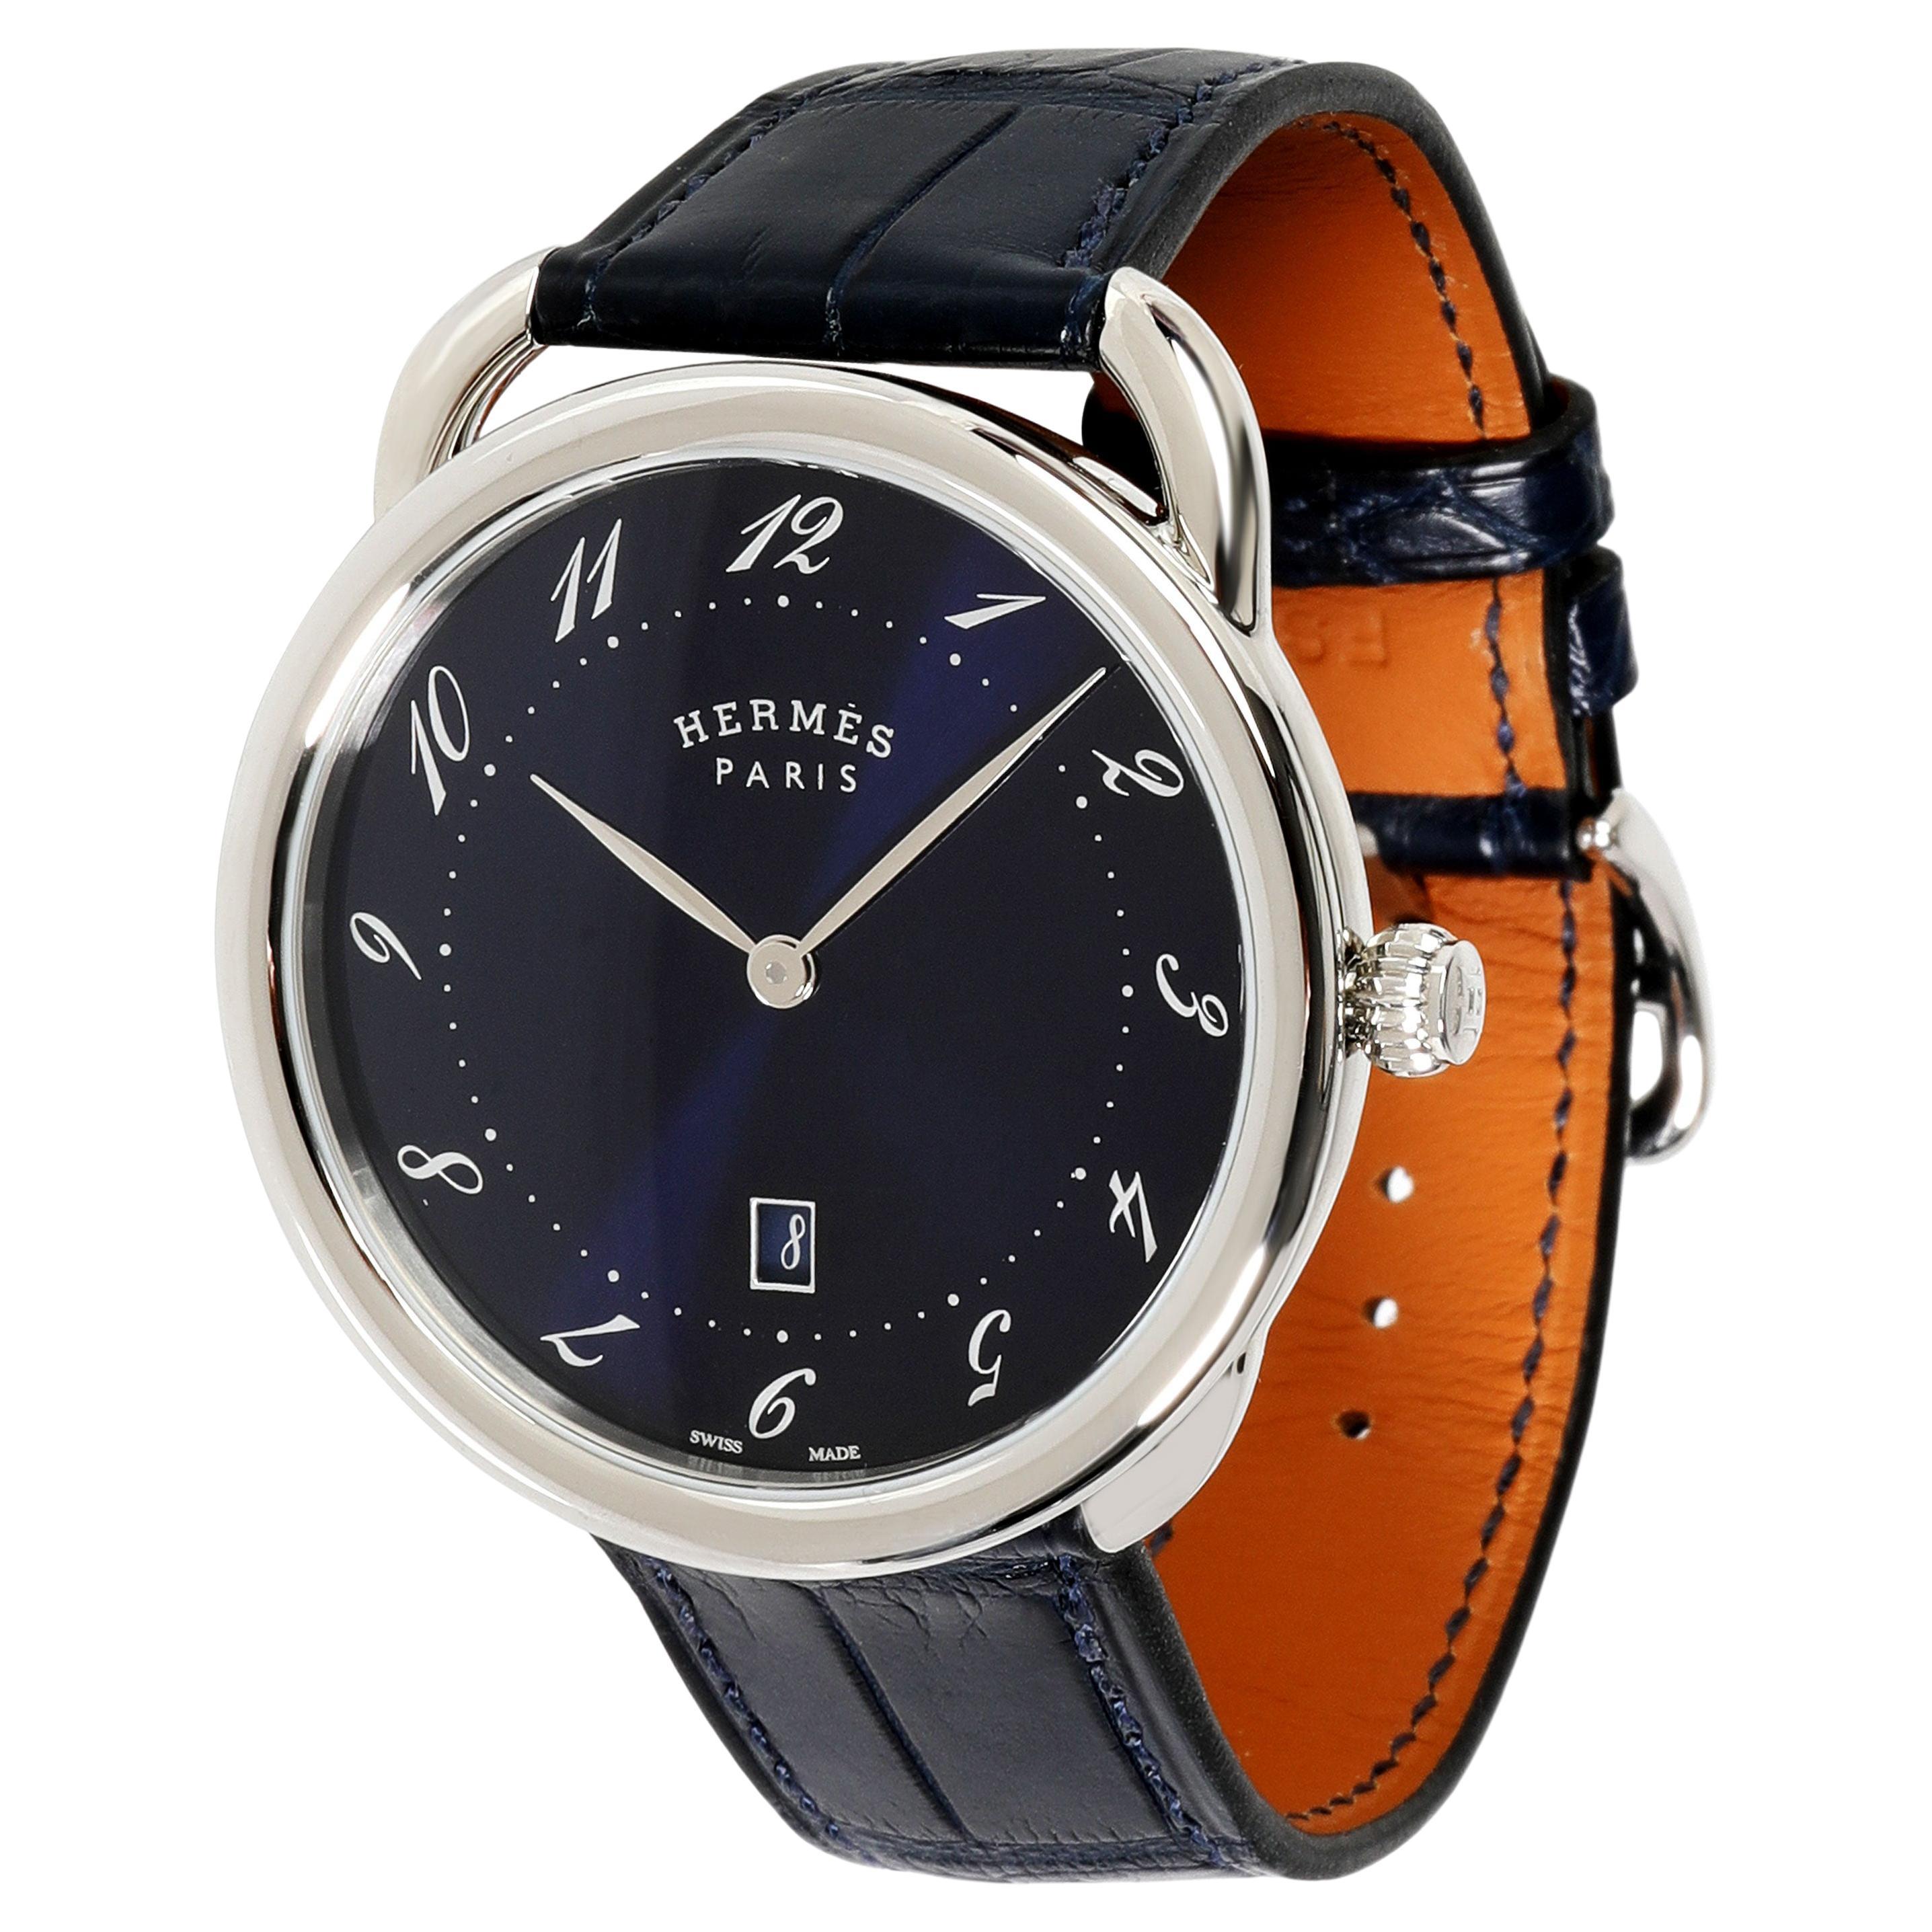 Hermès Arceau AR7Q.810 Men's Watch in Stainless Steel